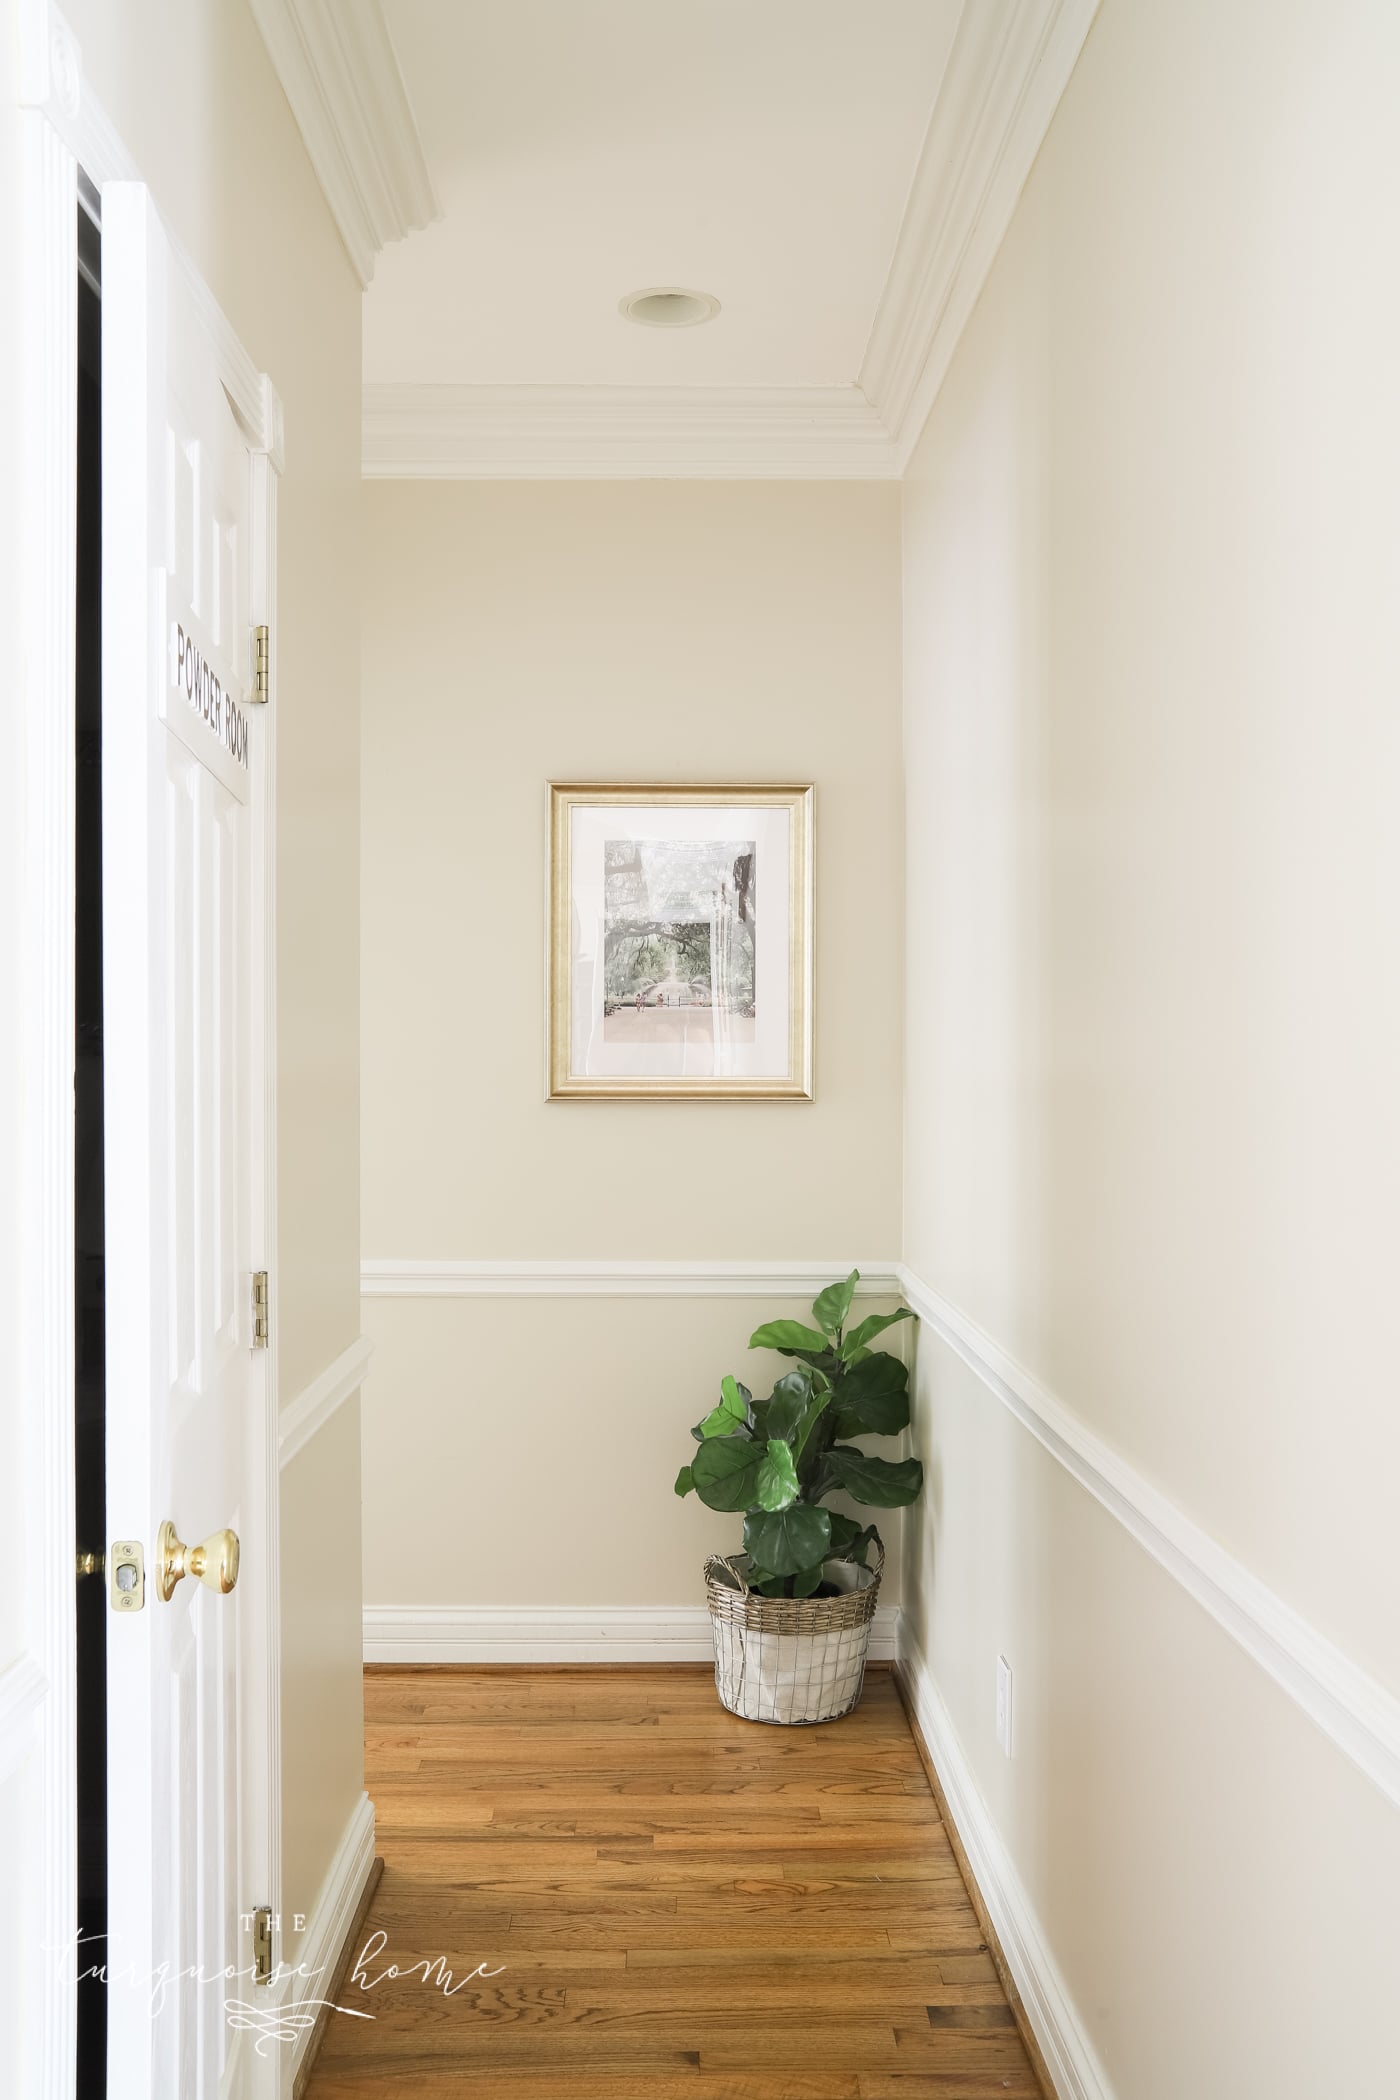 Simple Hallway Decor Ideas